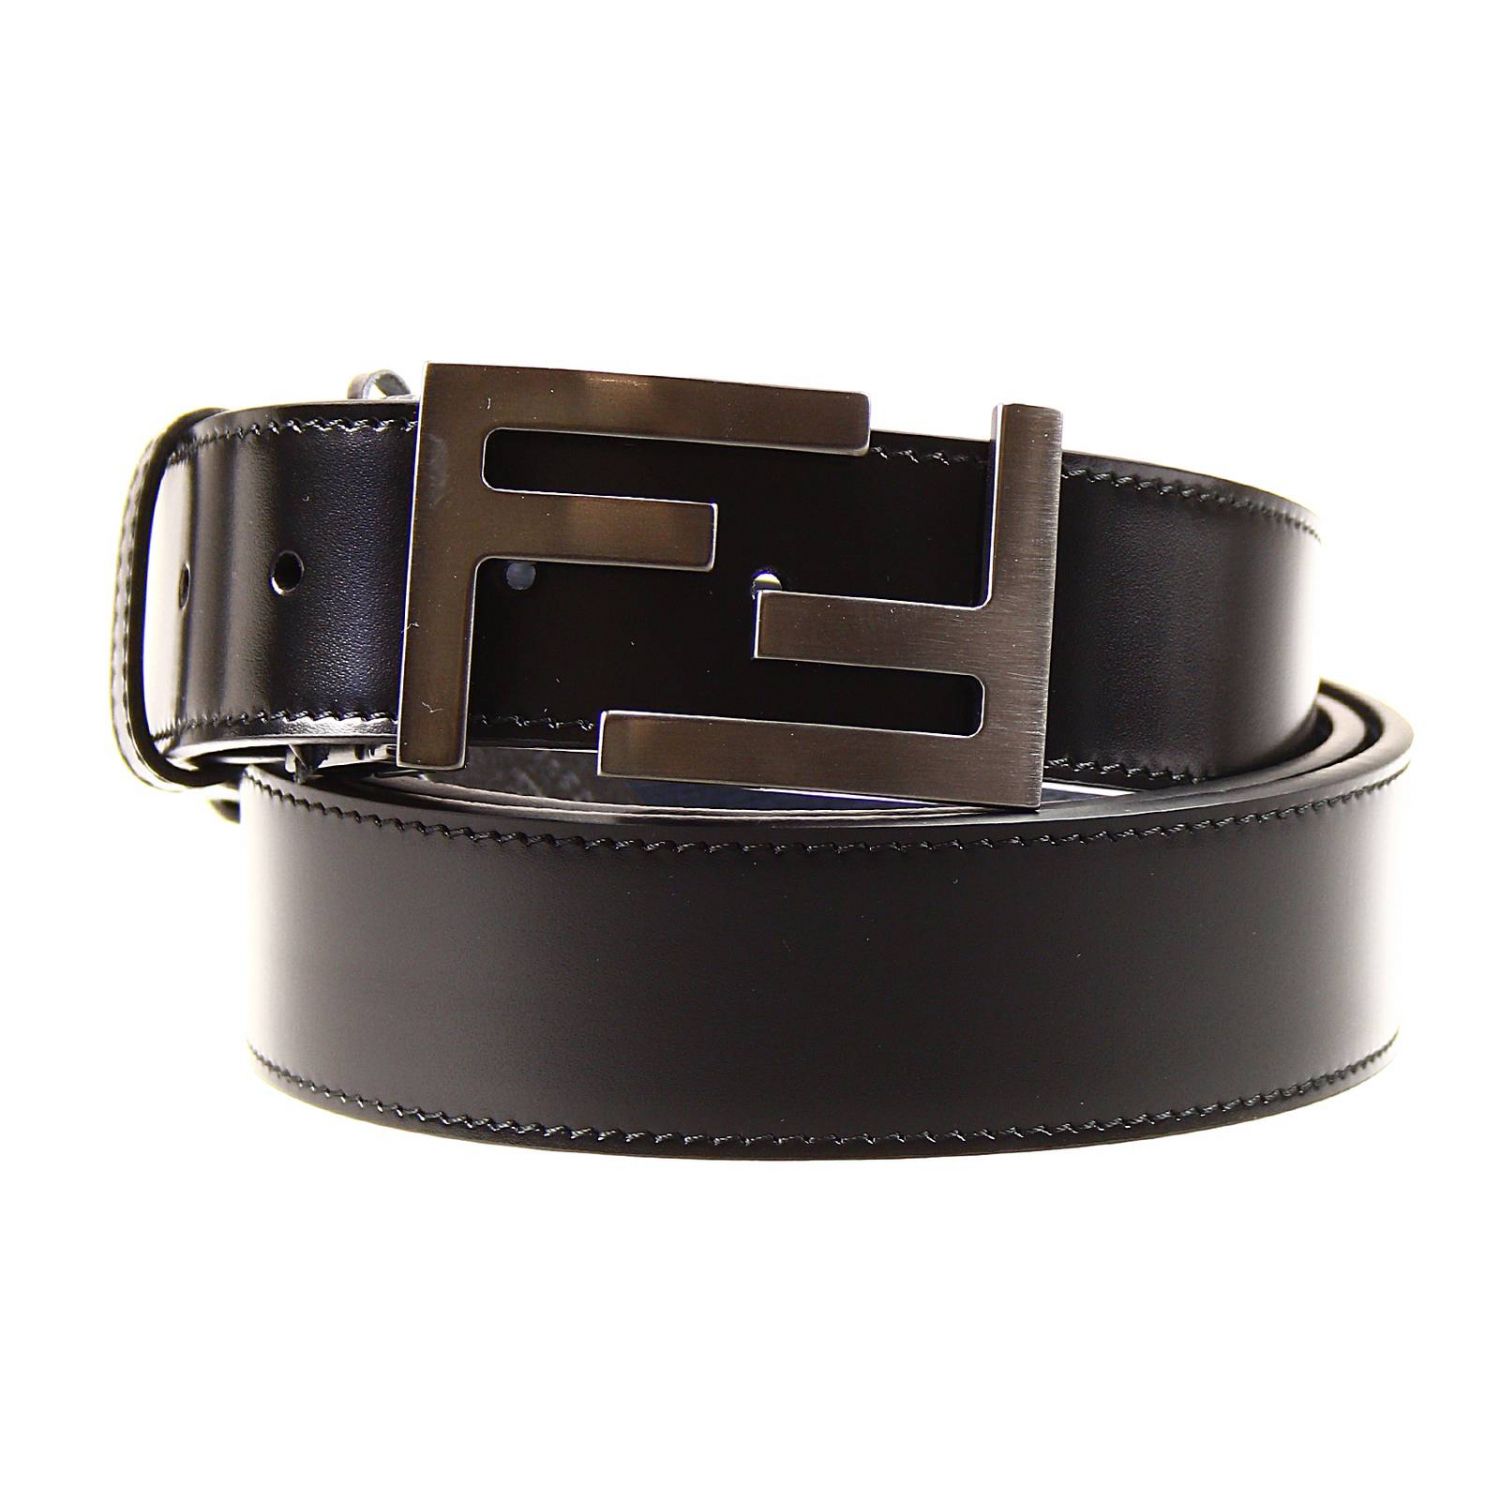 FENDI: belt buckle logo leather reversible/adjustable | Belt Fendi Men ...